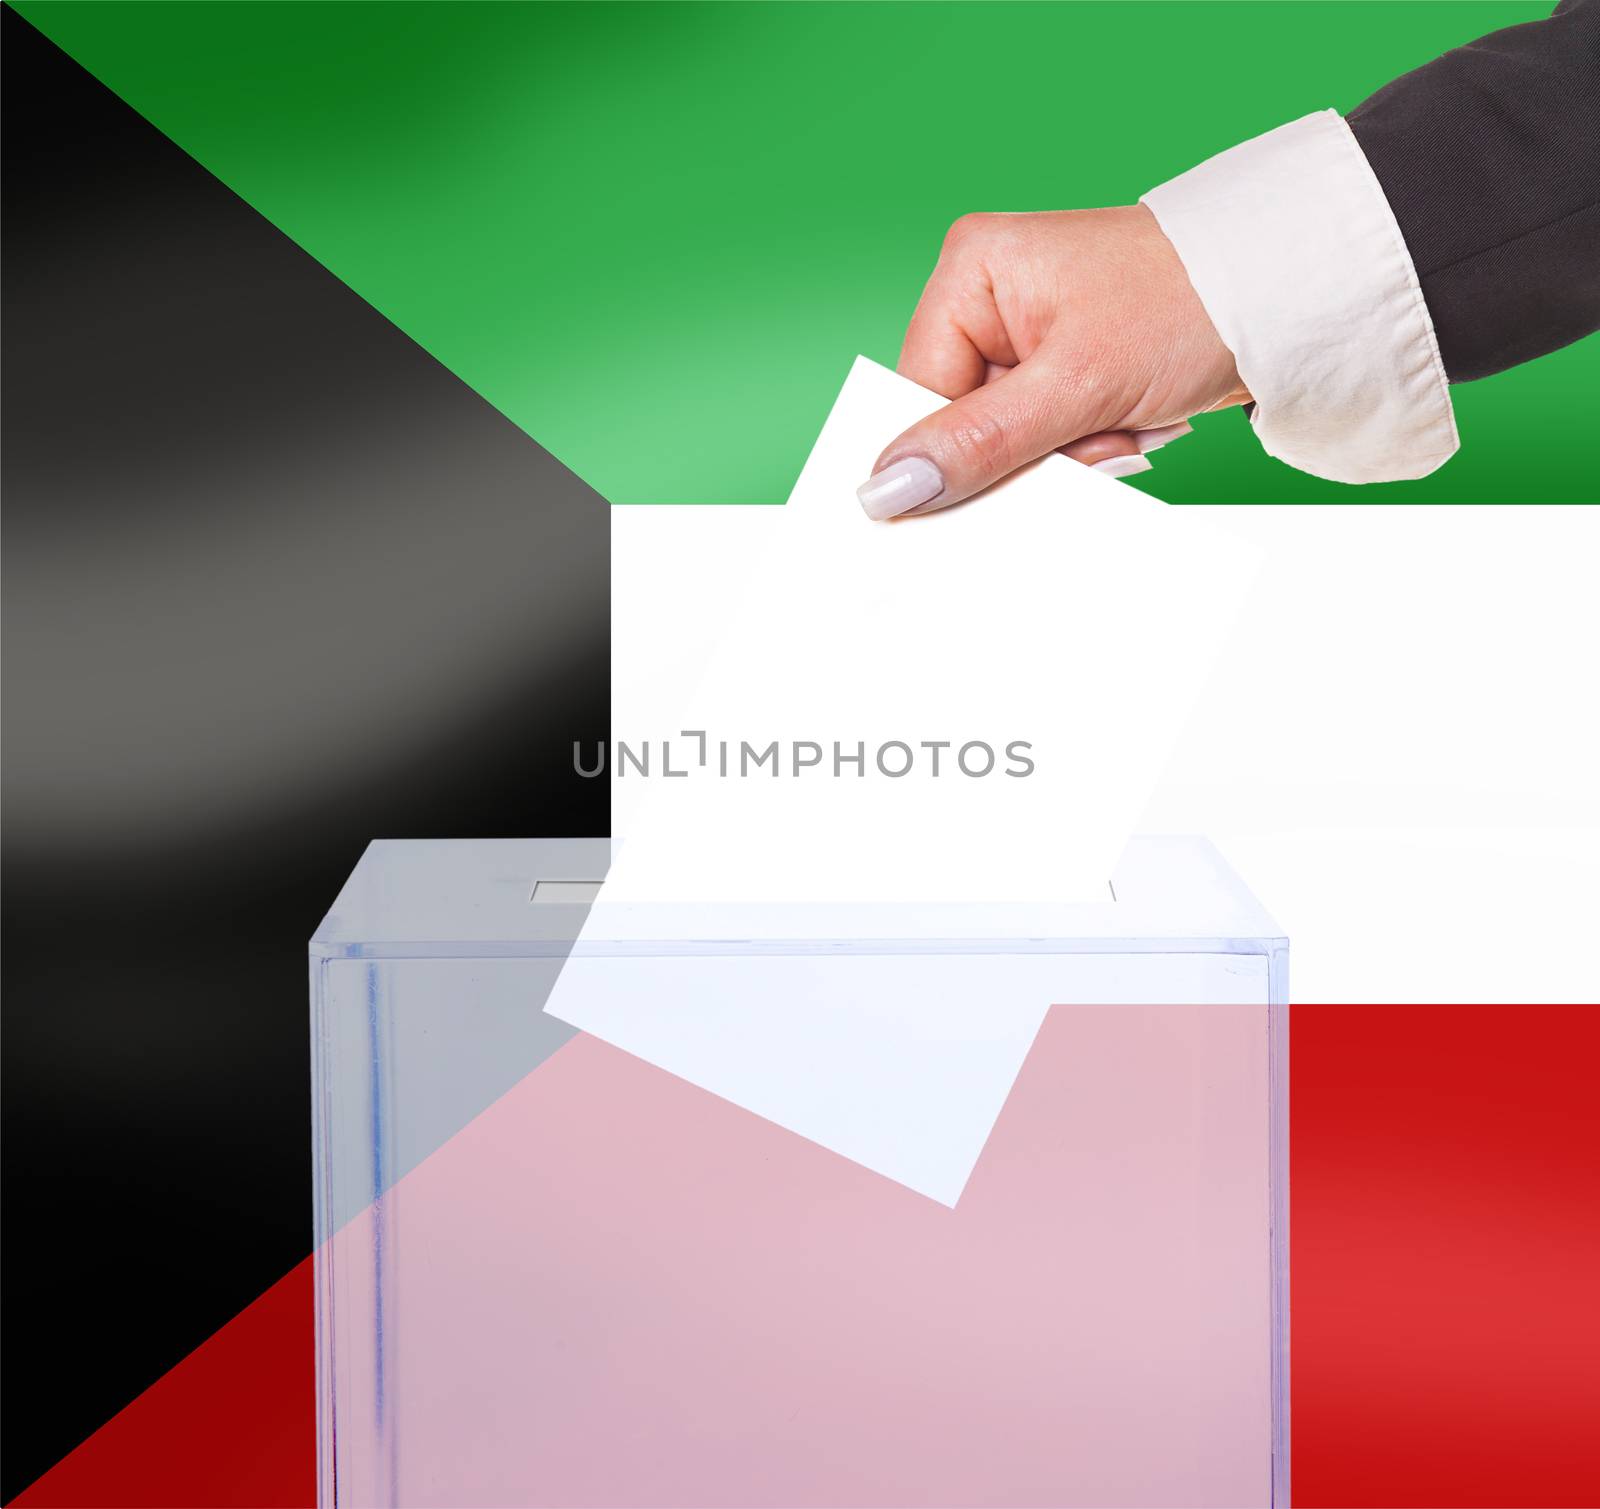 electoral vote by ballot, under the Kuwait flag